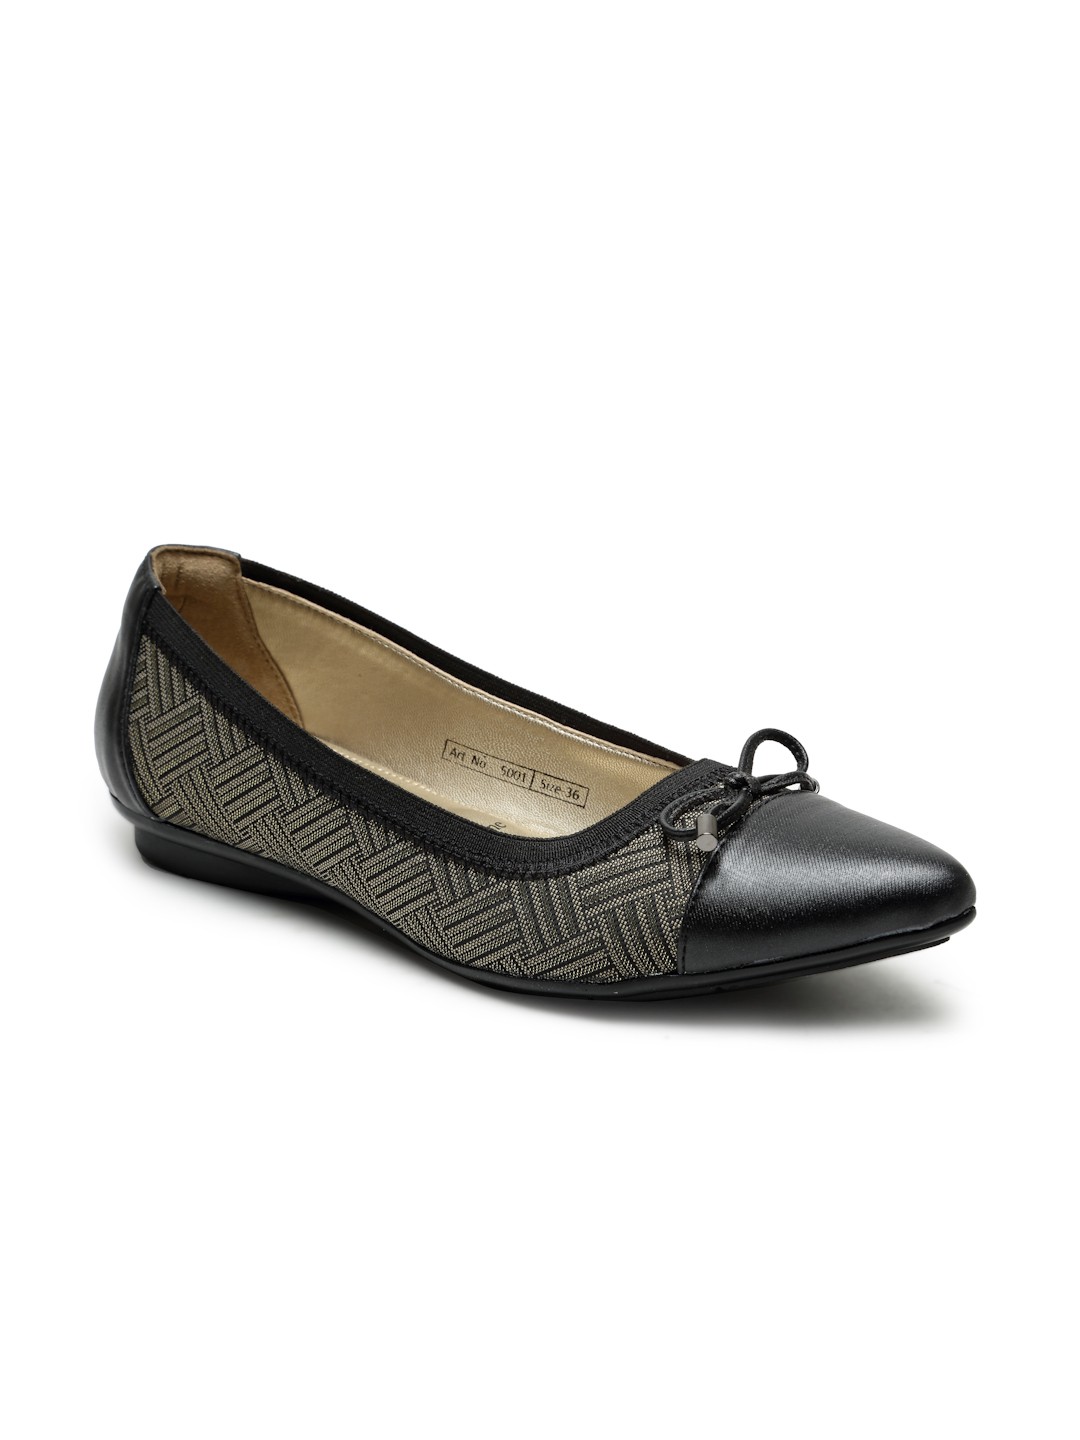 Buy Von Wellx Germany Comfort Women's Black Casual Shoes Lisa Online in Chandigarh